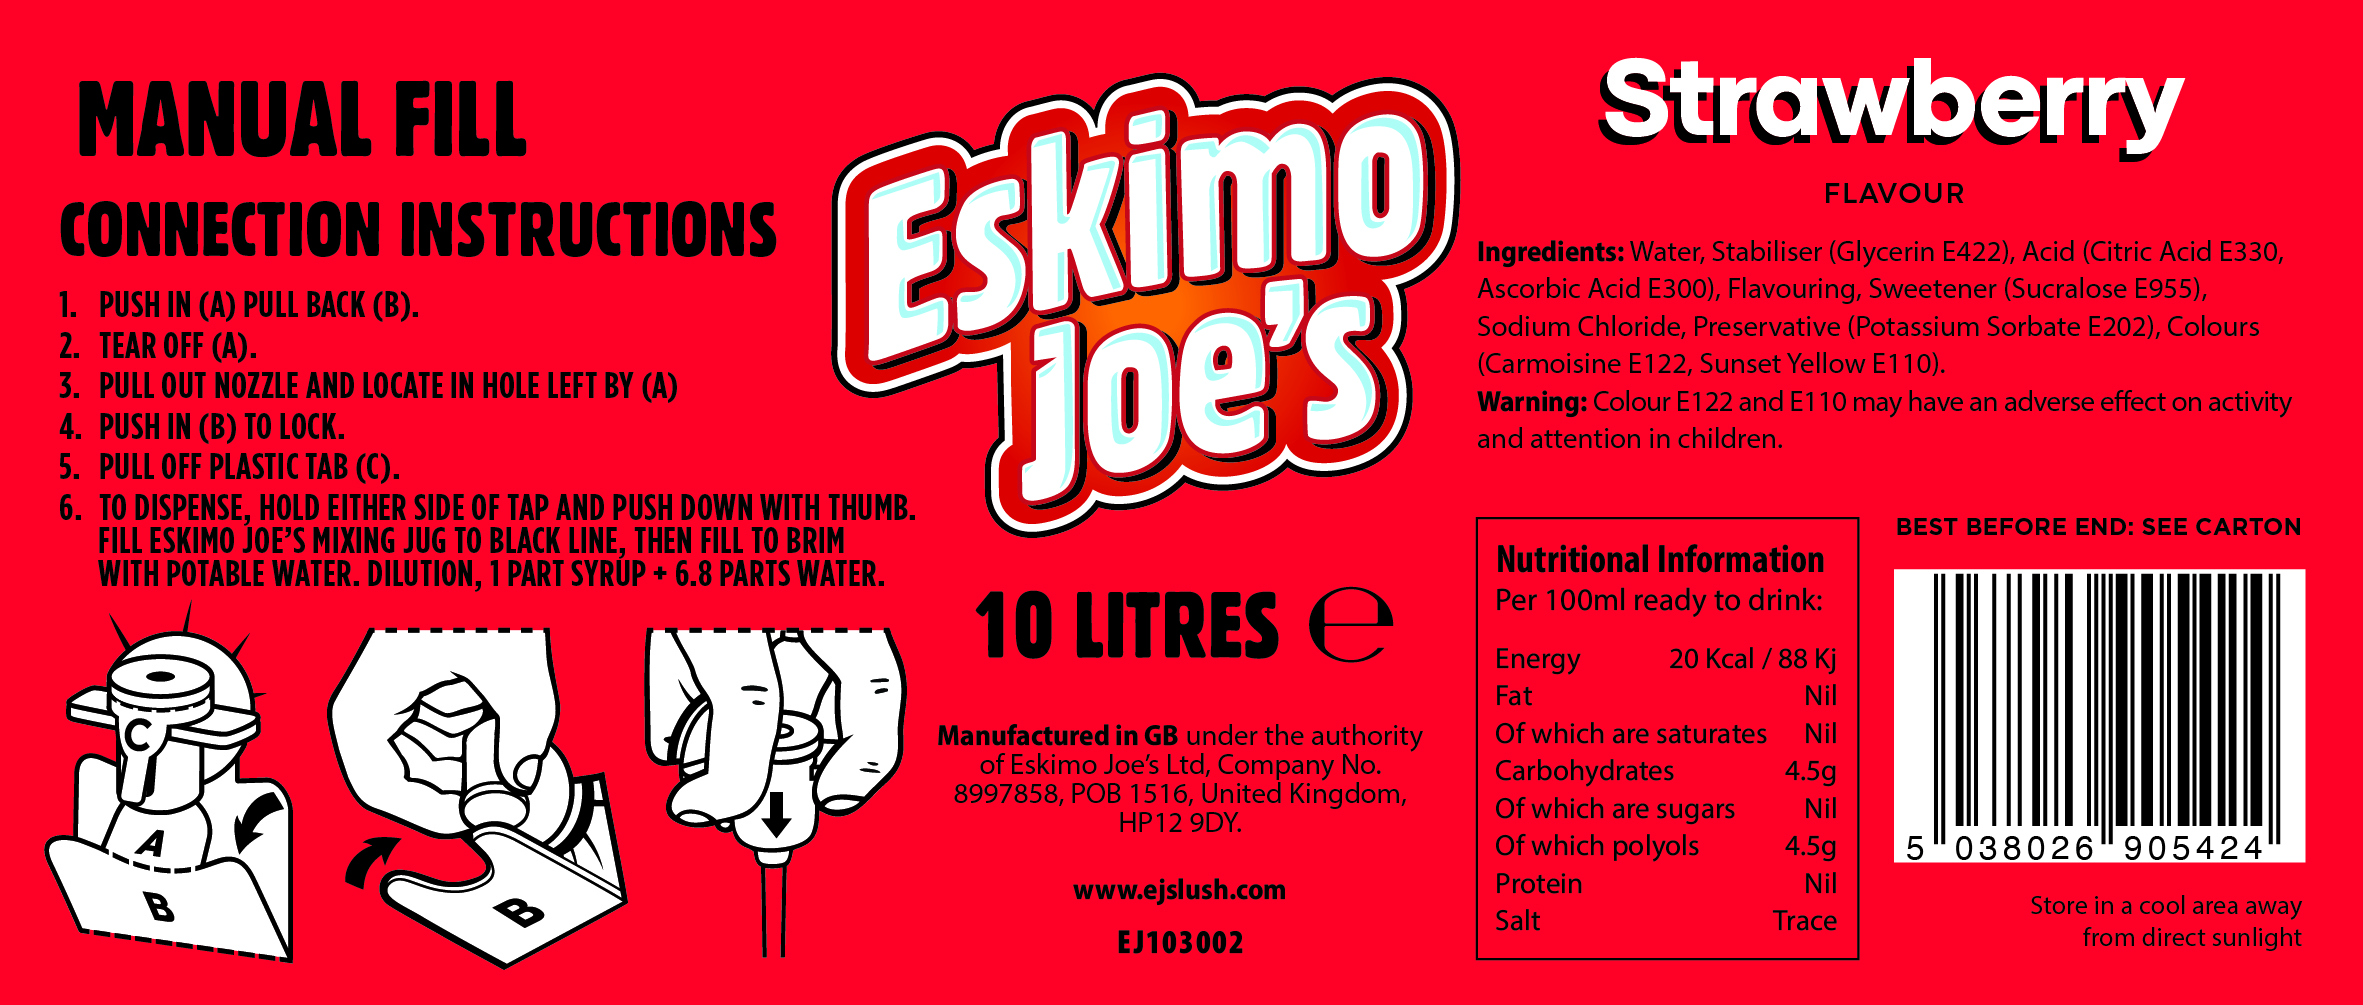 Eskimo_joe_Box_Labels_Strawberry_Flavour.jpg